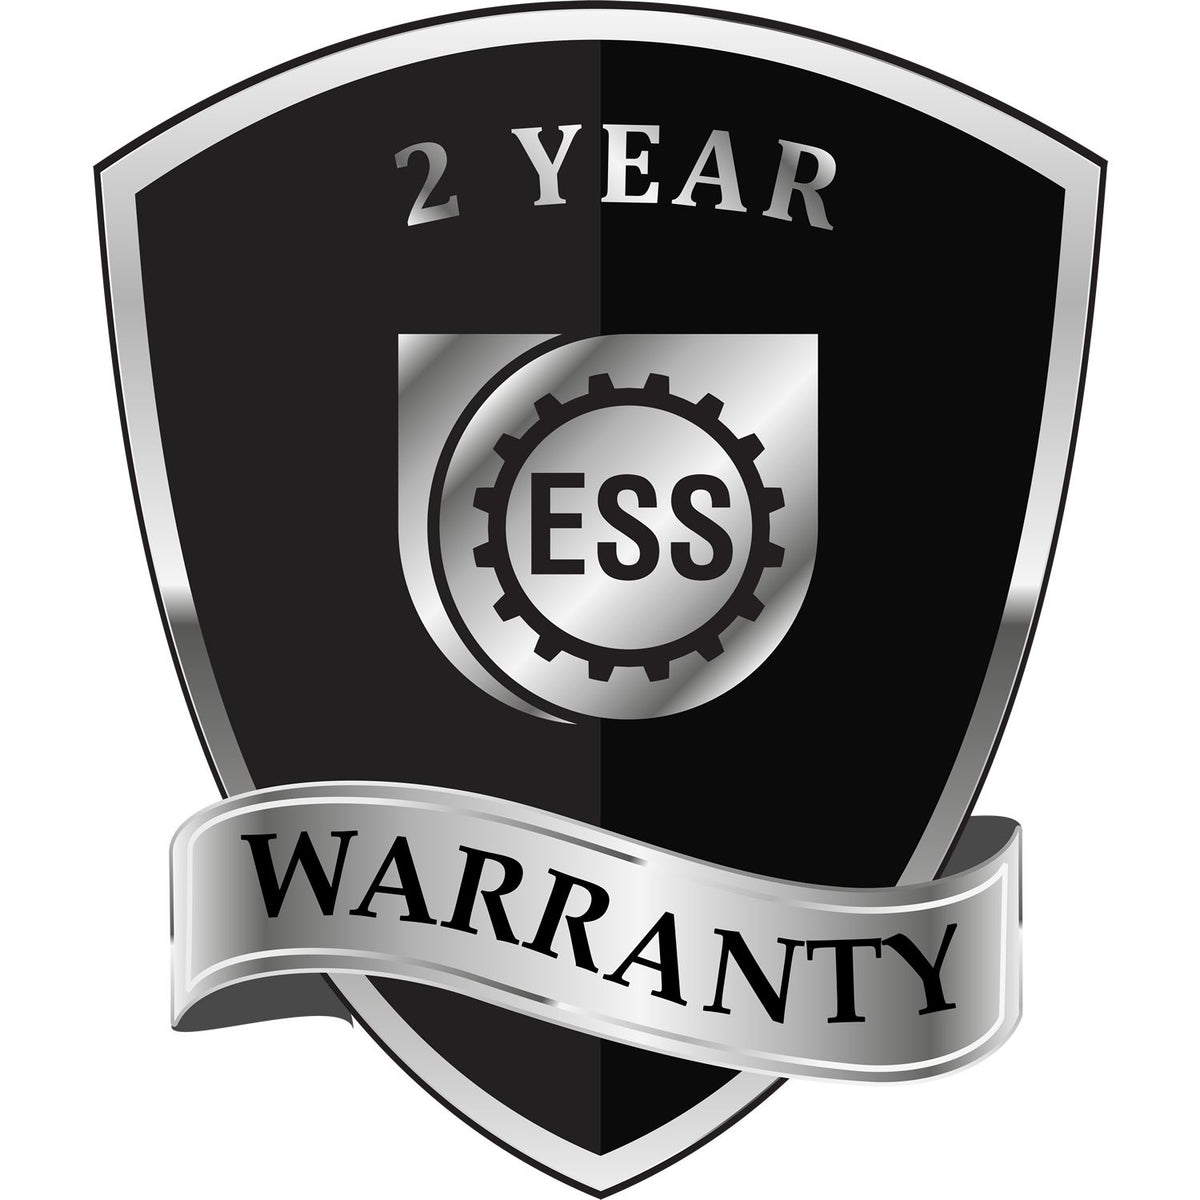 A black and silver badge or emblem showing warranty information for the South Carolina Geologist Desk Seal